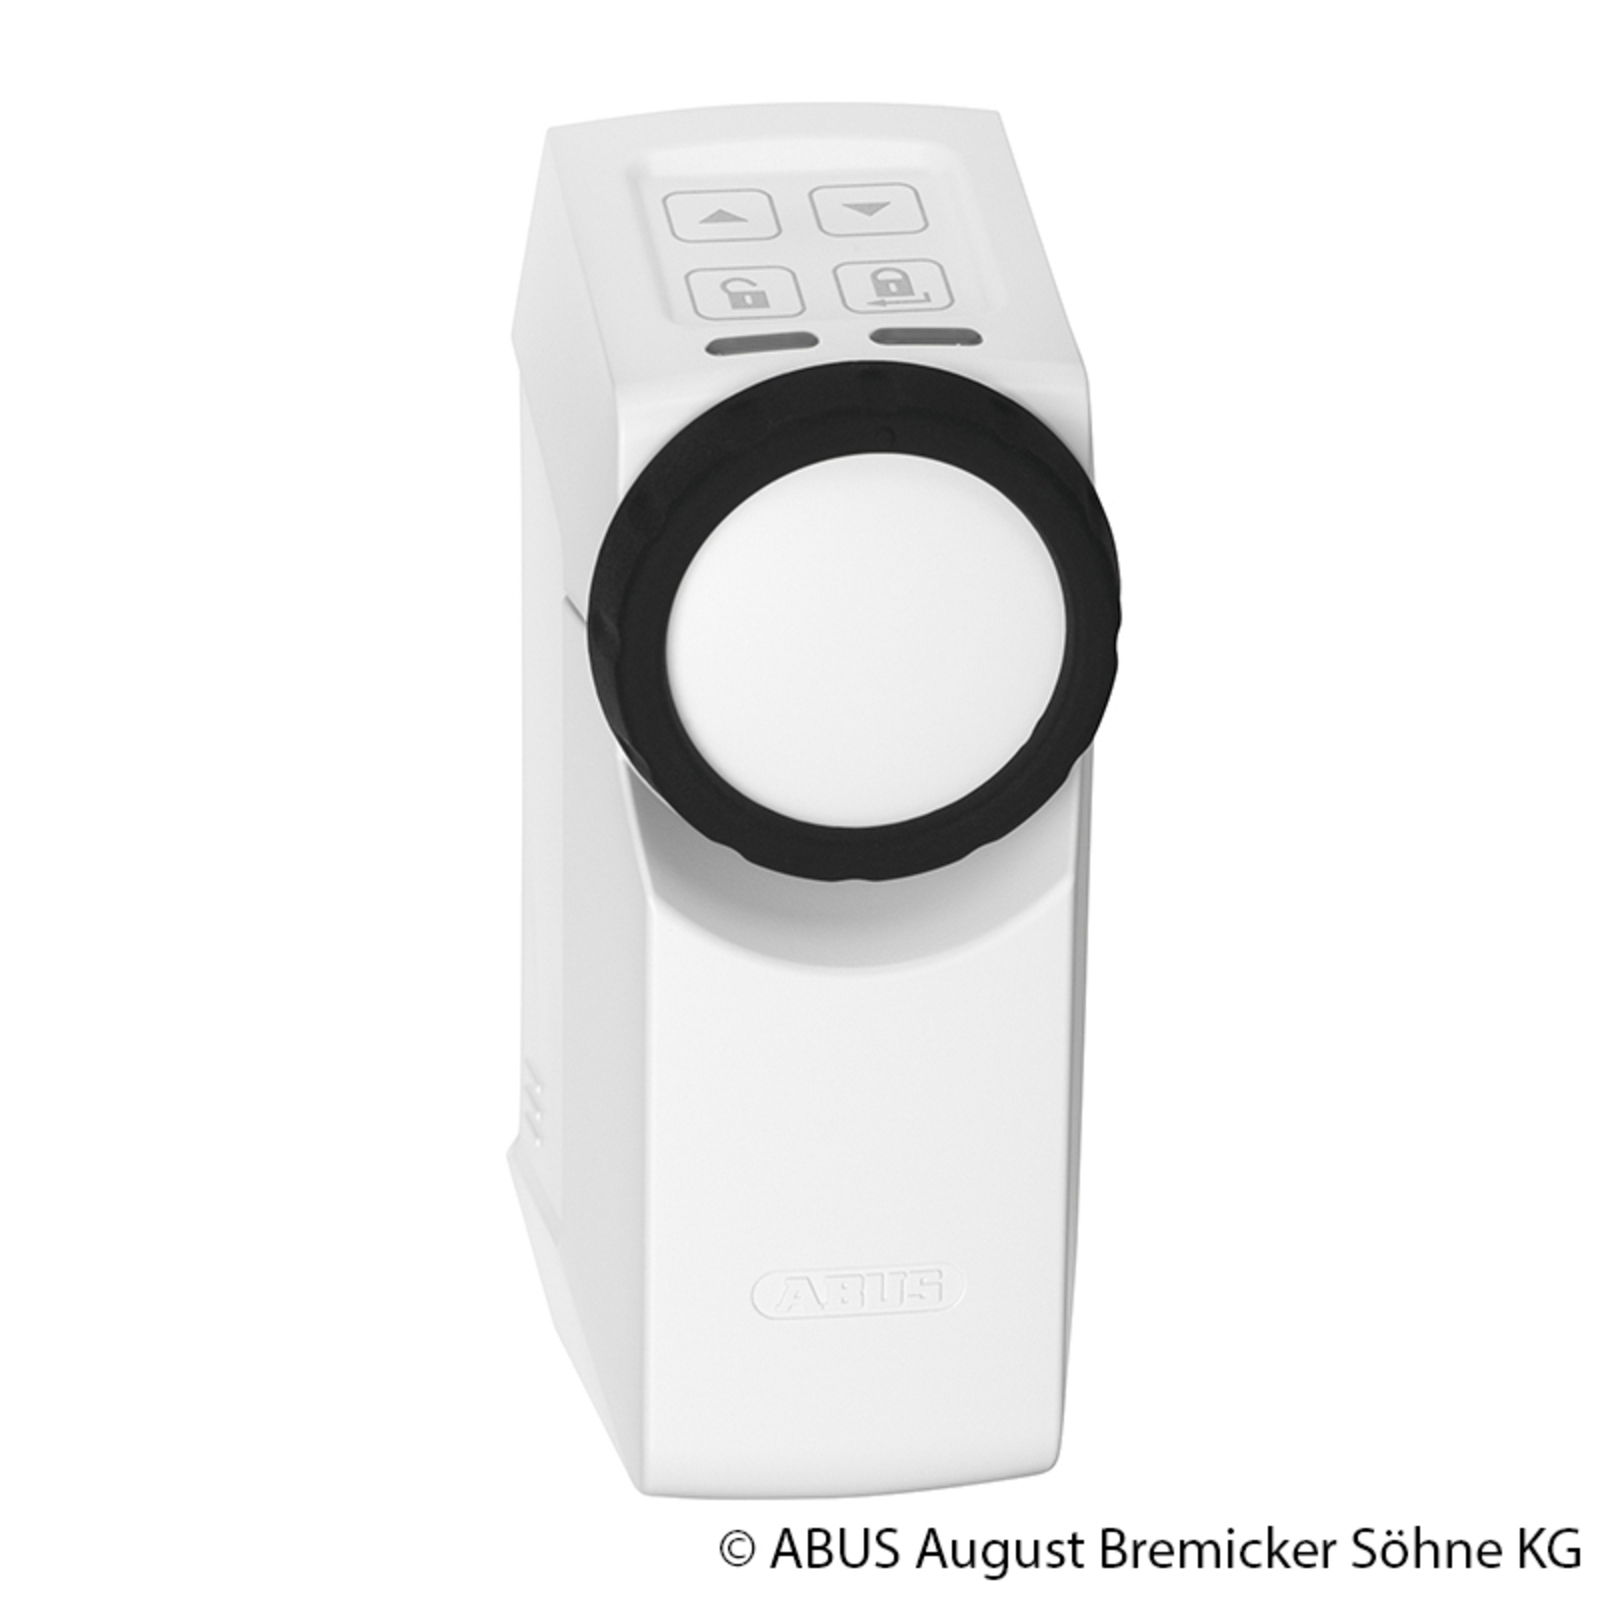 ABUS Z-Wave door lock drive Hometec Pro, white